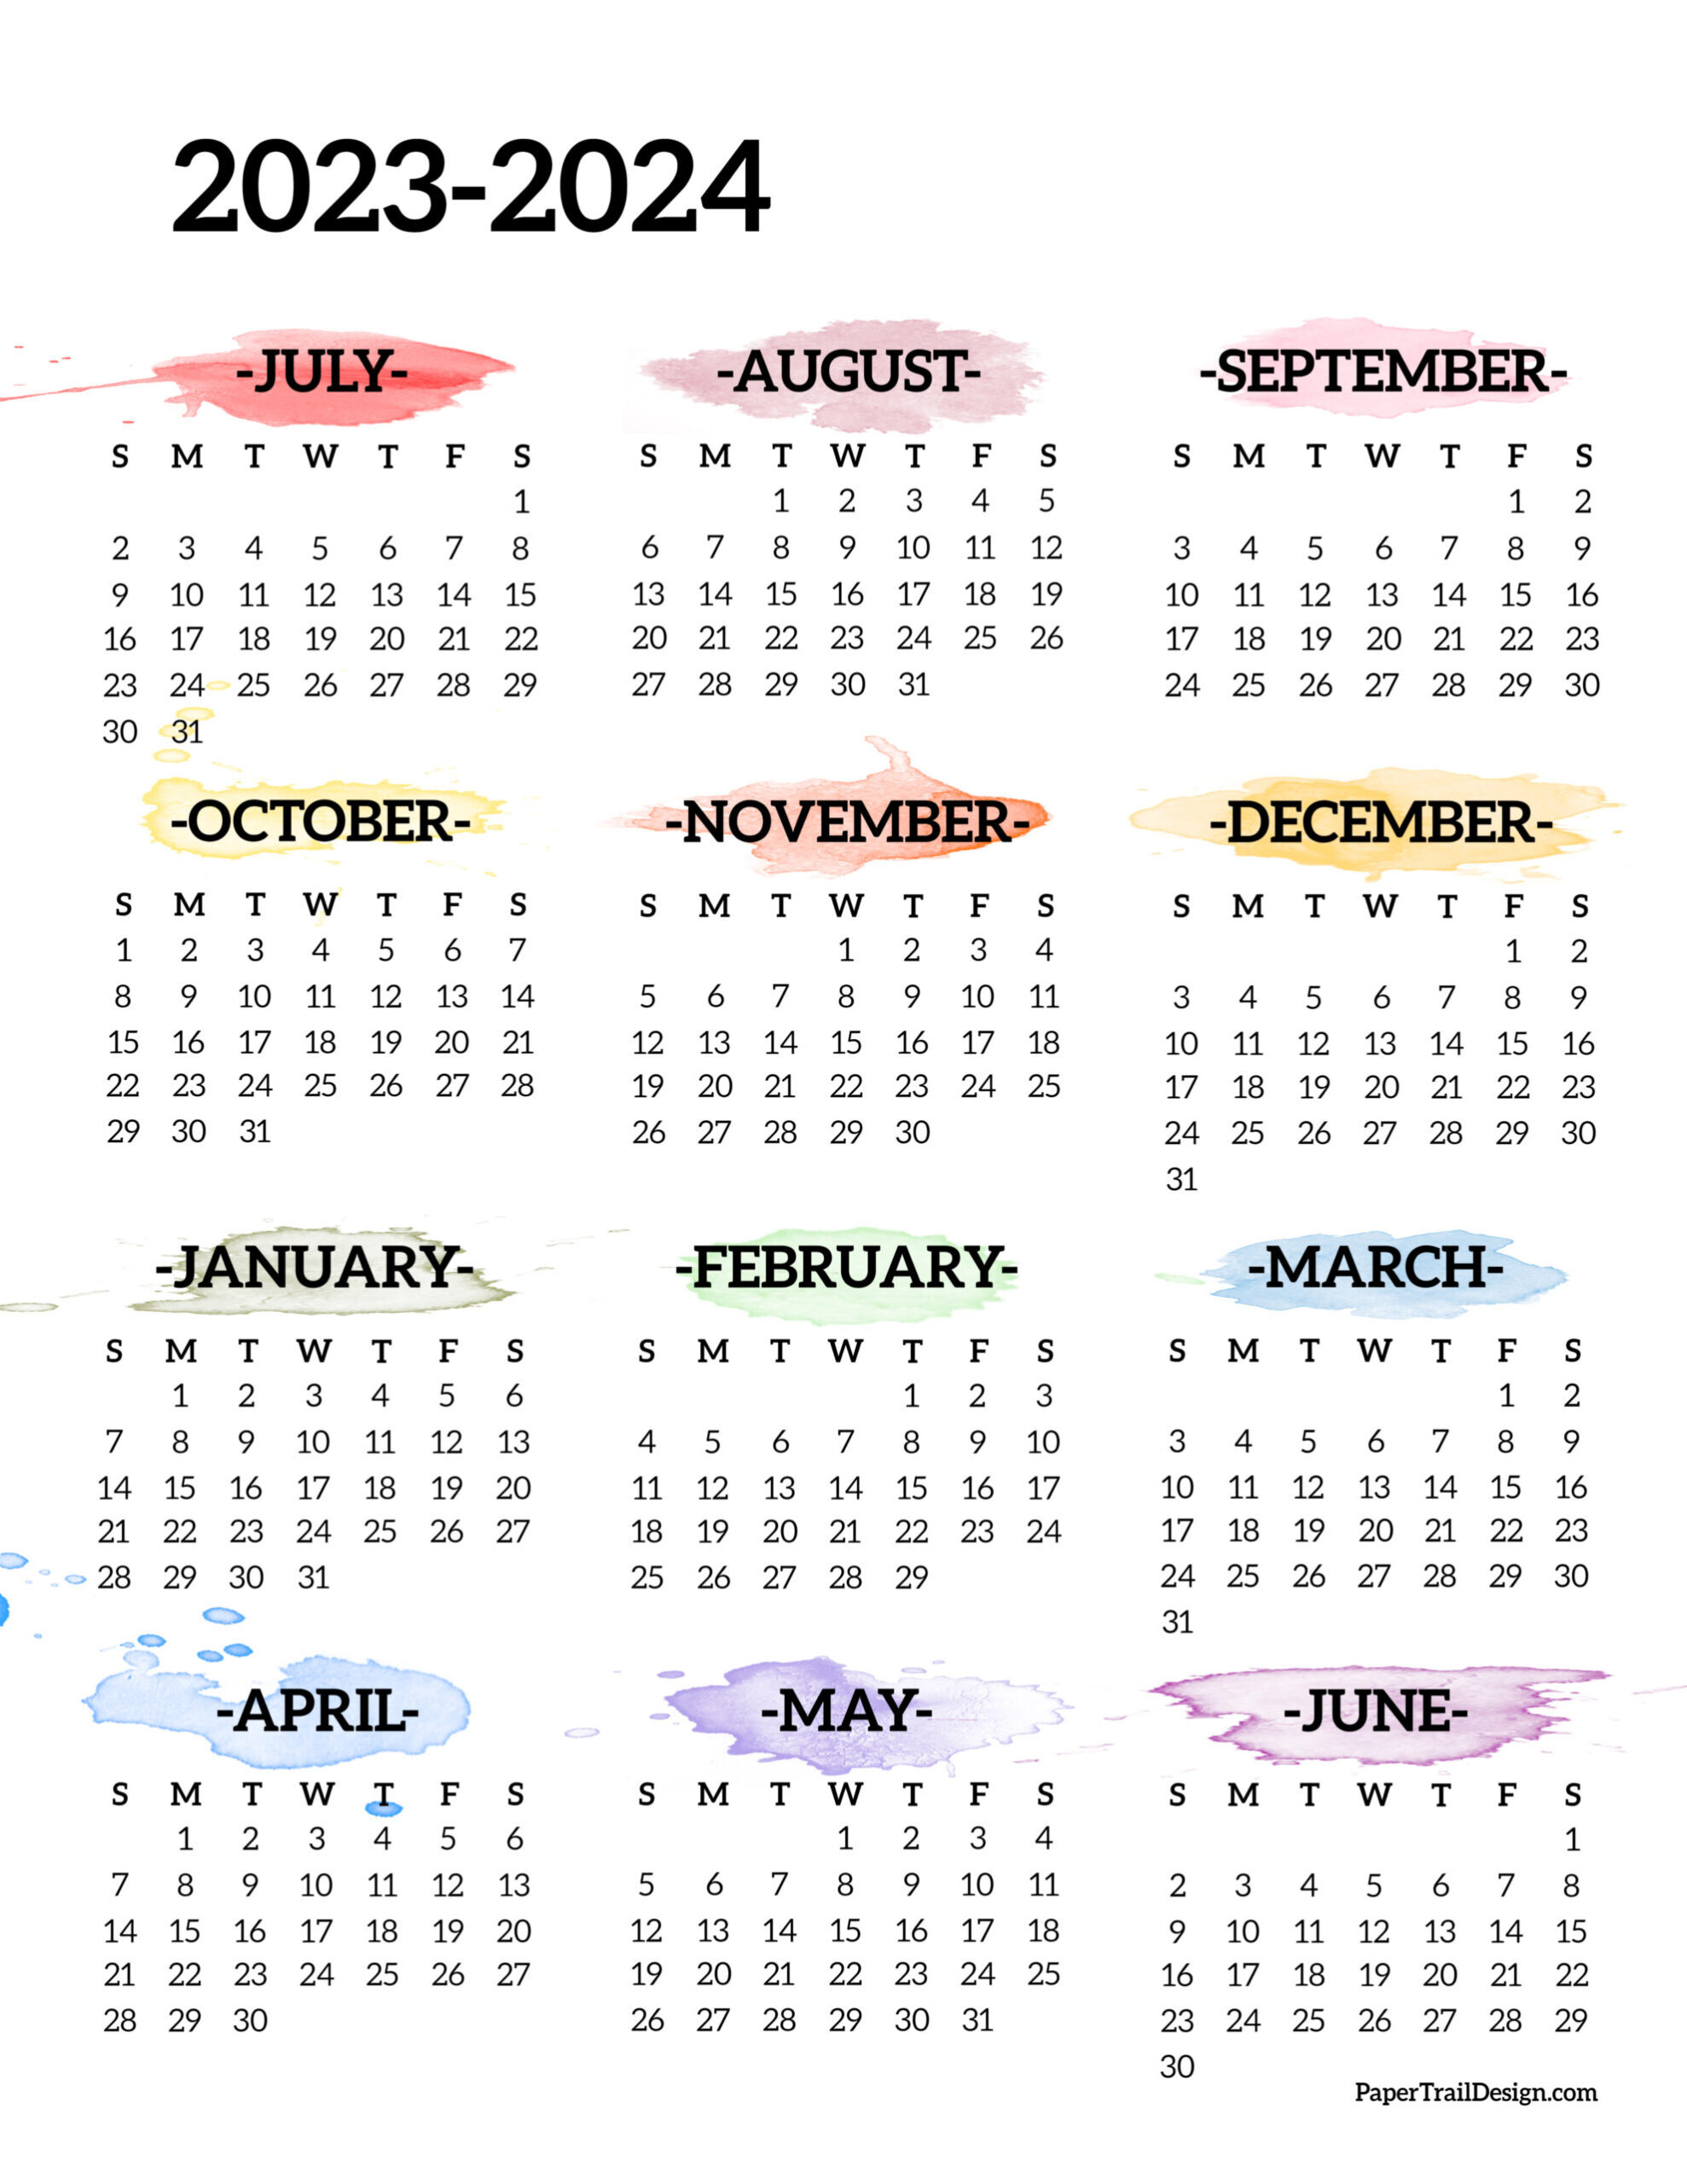 2023-2024 School Year Calendar Free Printable - Paper Trail Design | Calendar August 2023 - July 2024